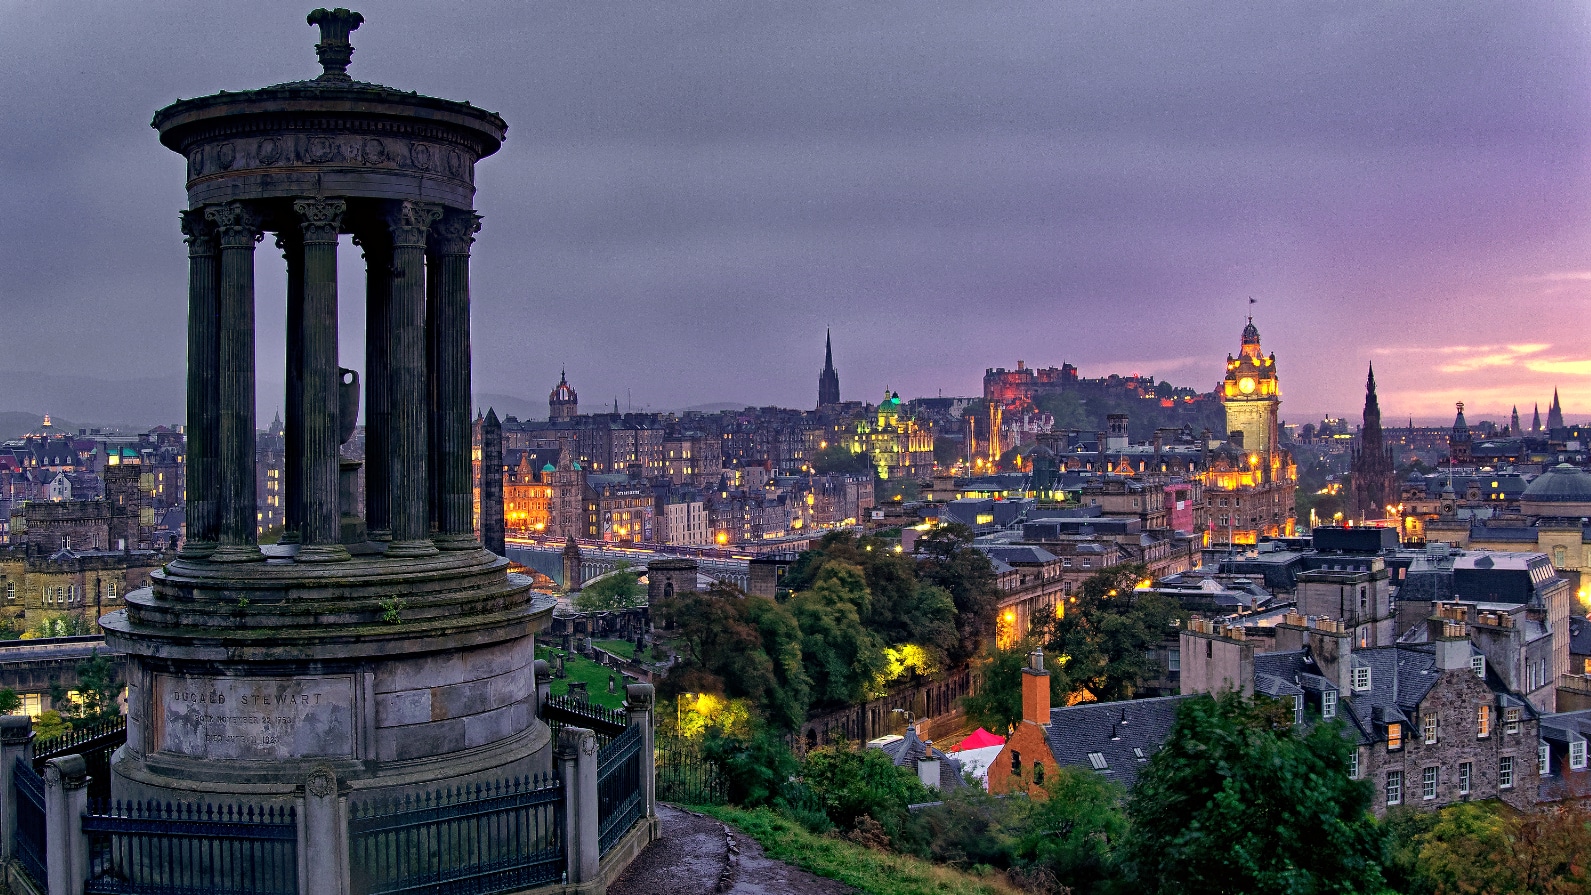 View of Edinburgh at dusk from Calton Hill